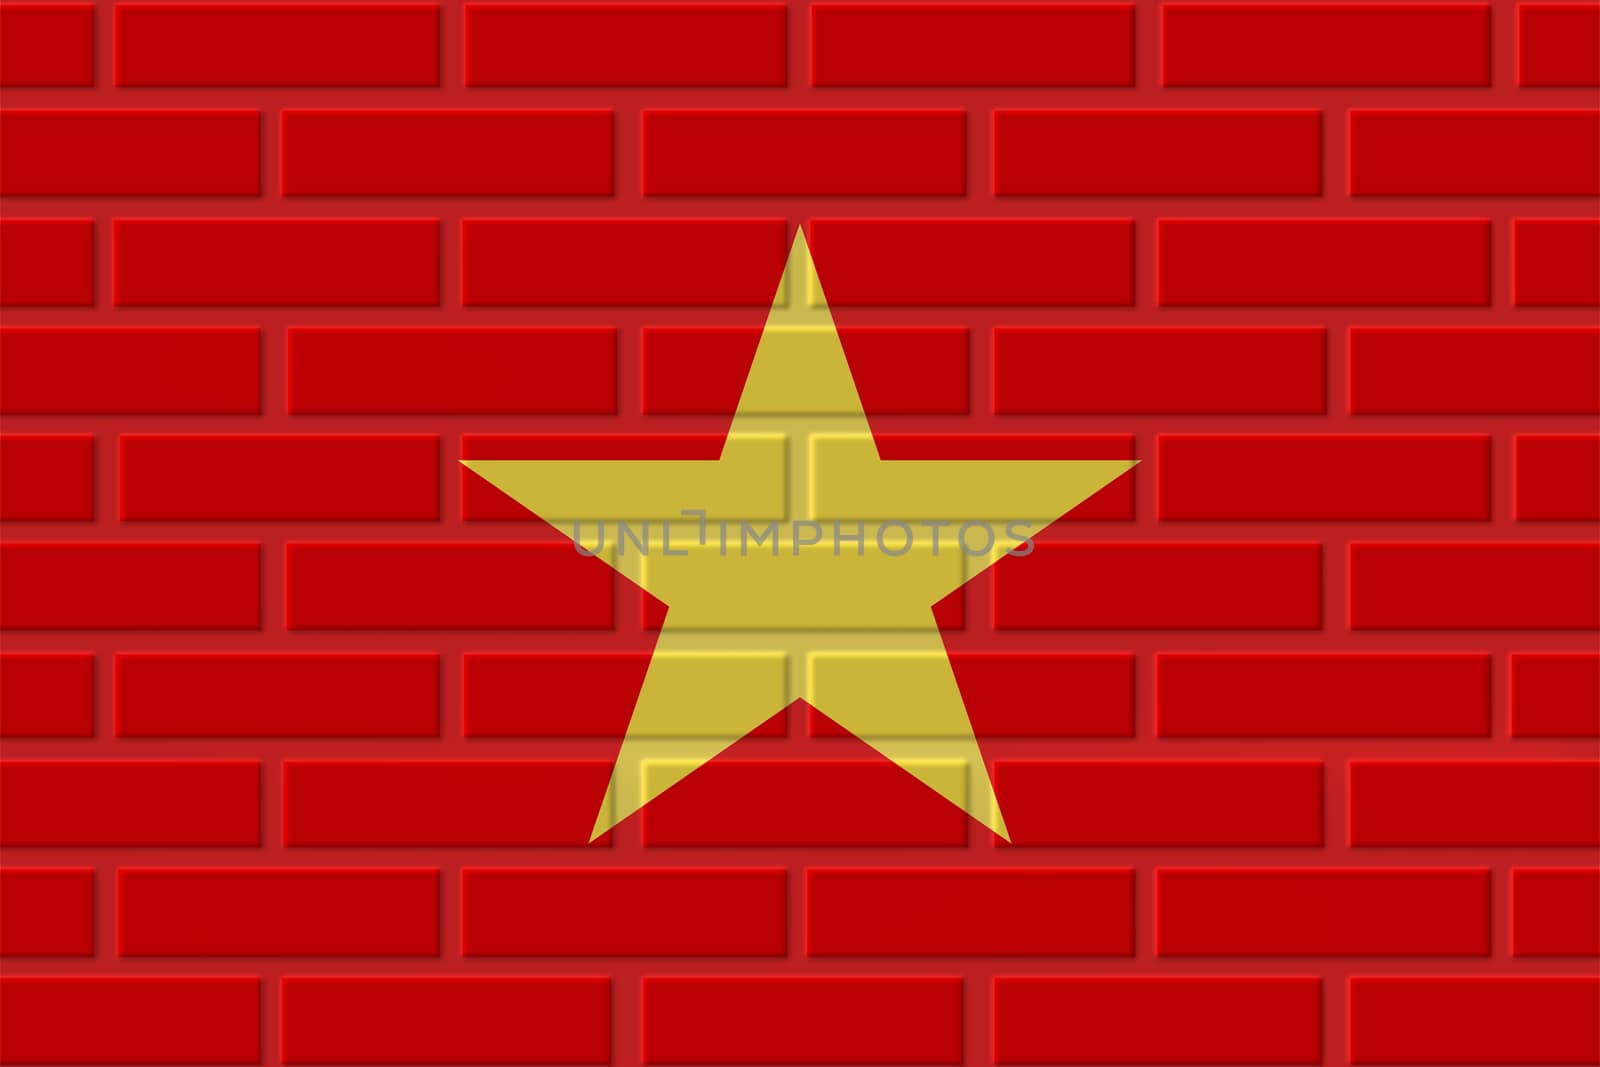 Vietnam brick flag illustration by Visual-Content